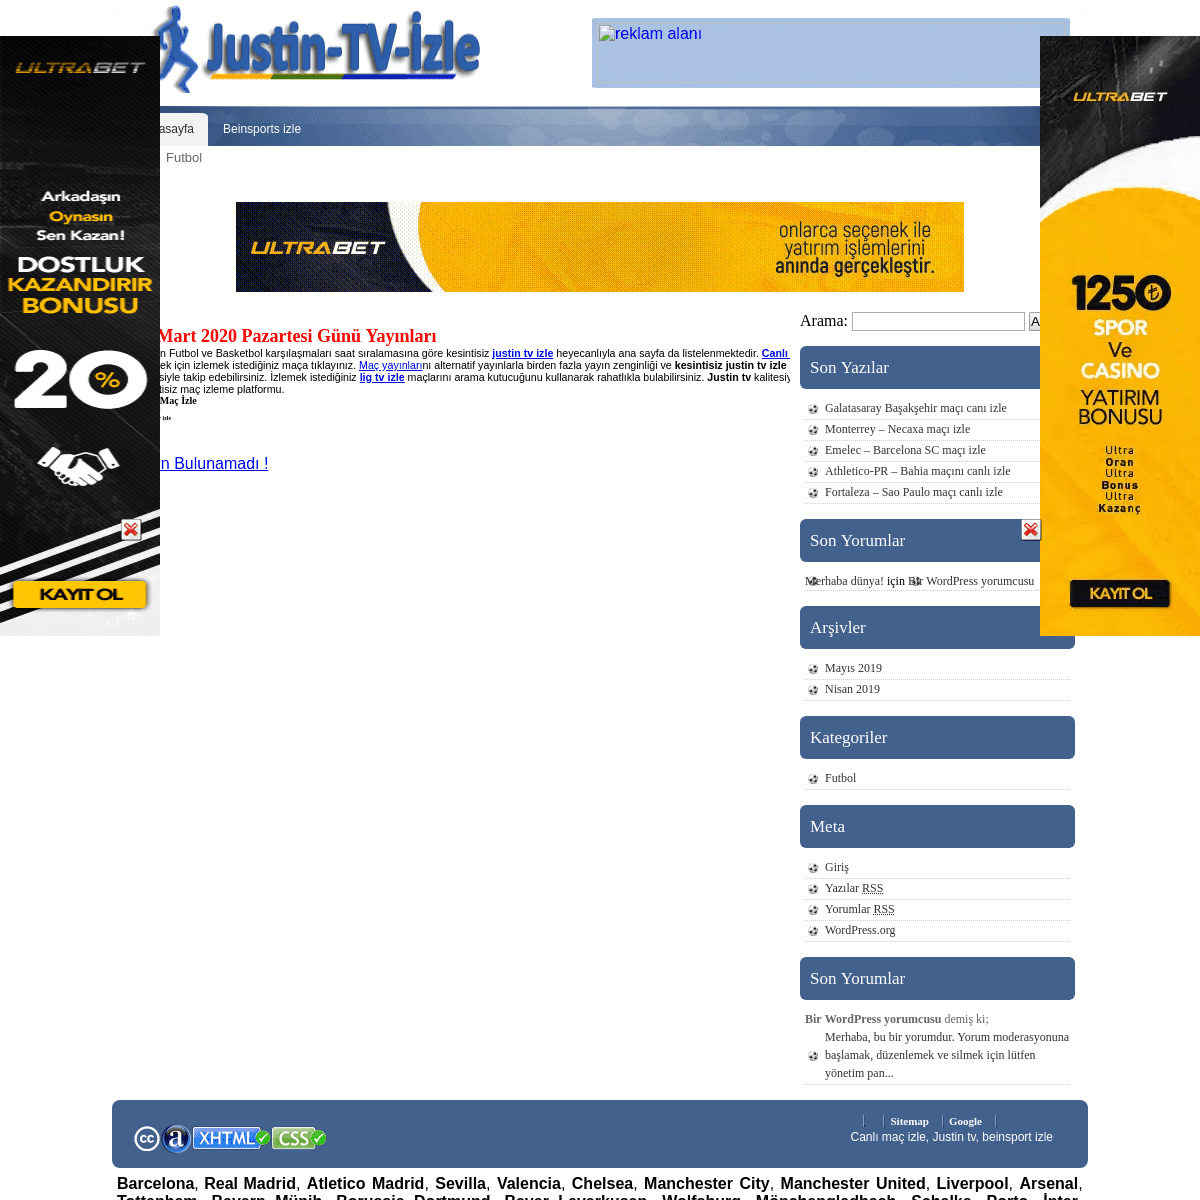 A complete backup of justintvizlesene.com